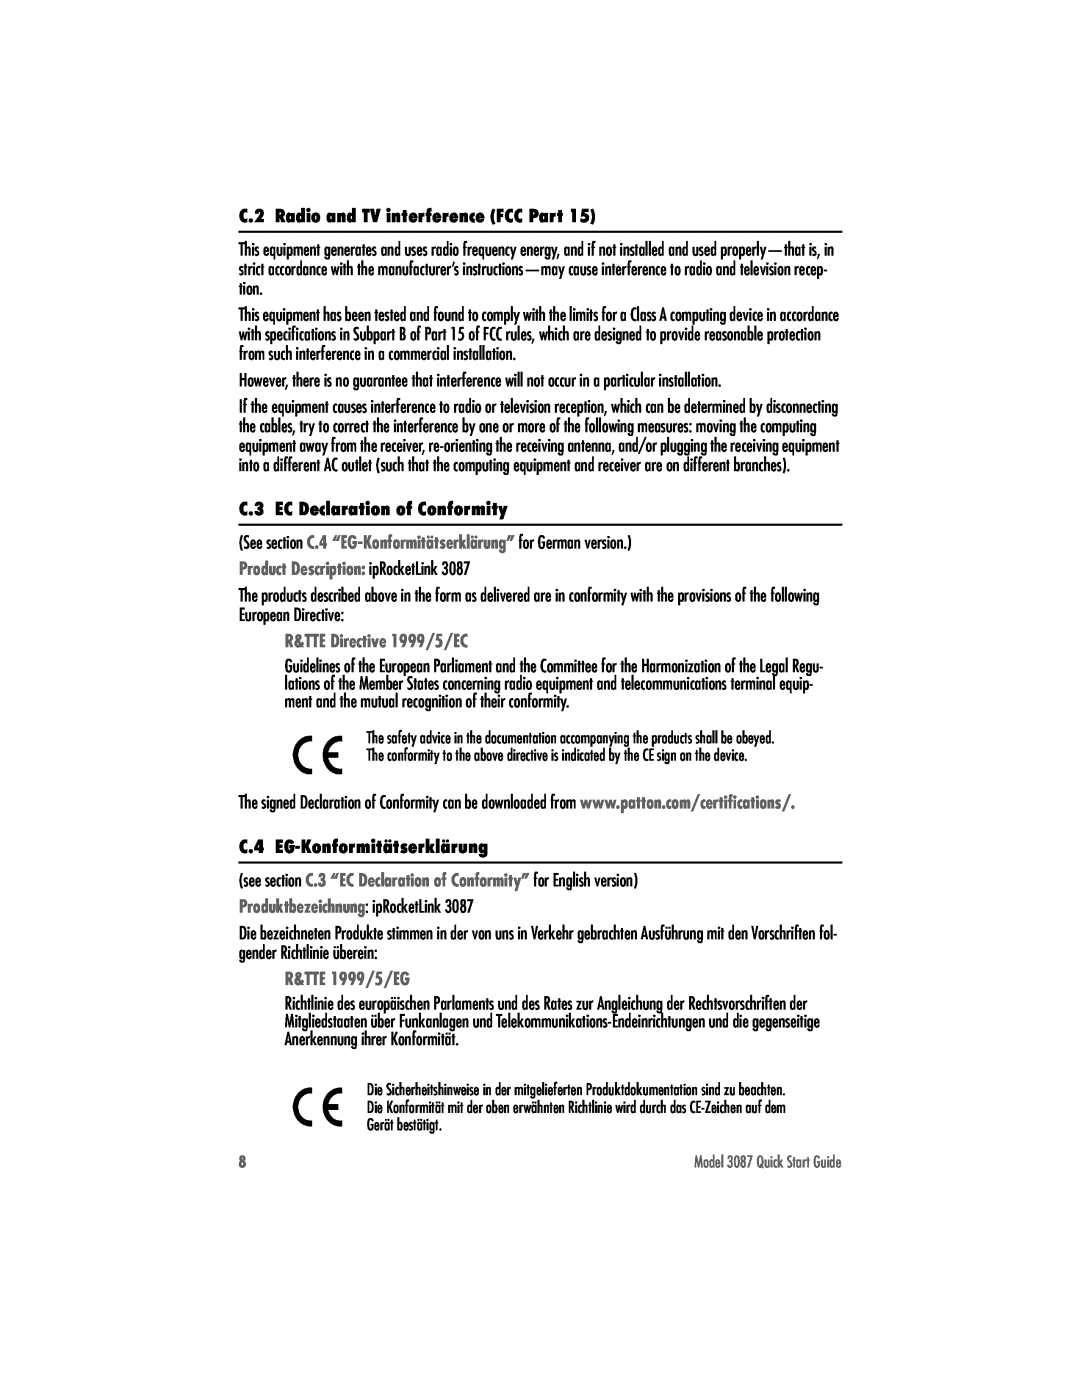 Patton electronic 3087 C.2 Radio and TV interference FCC Part, C.3 EC Declaration of Conformity, R&TTE Directive 1999/5/EC 